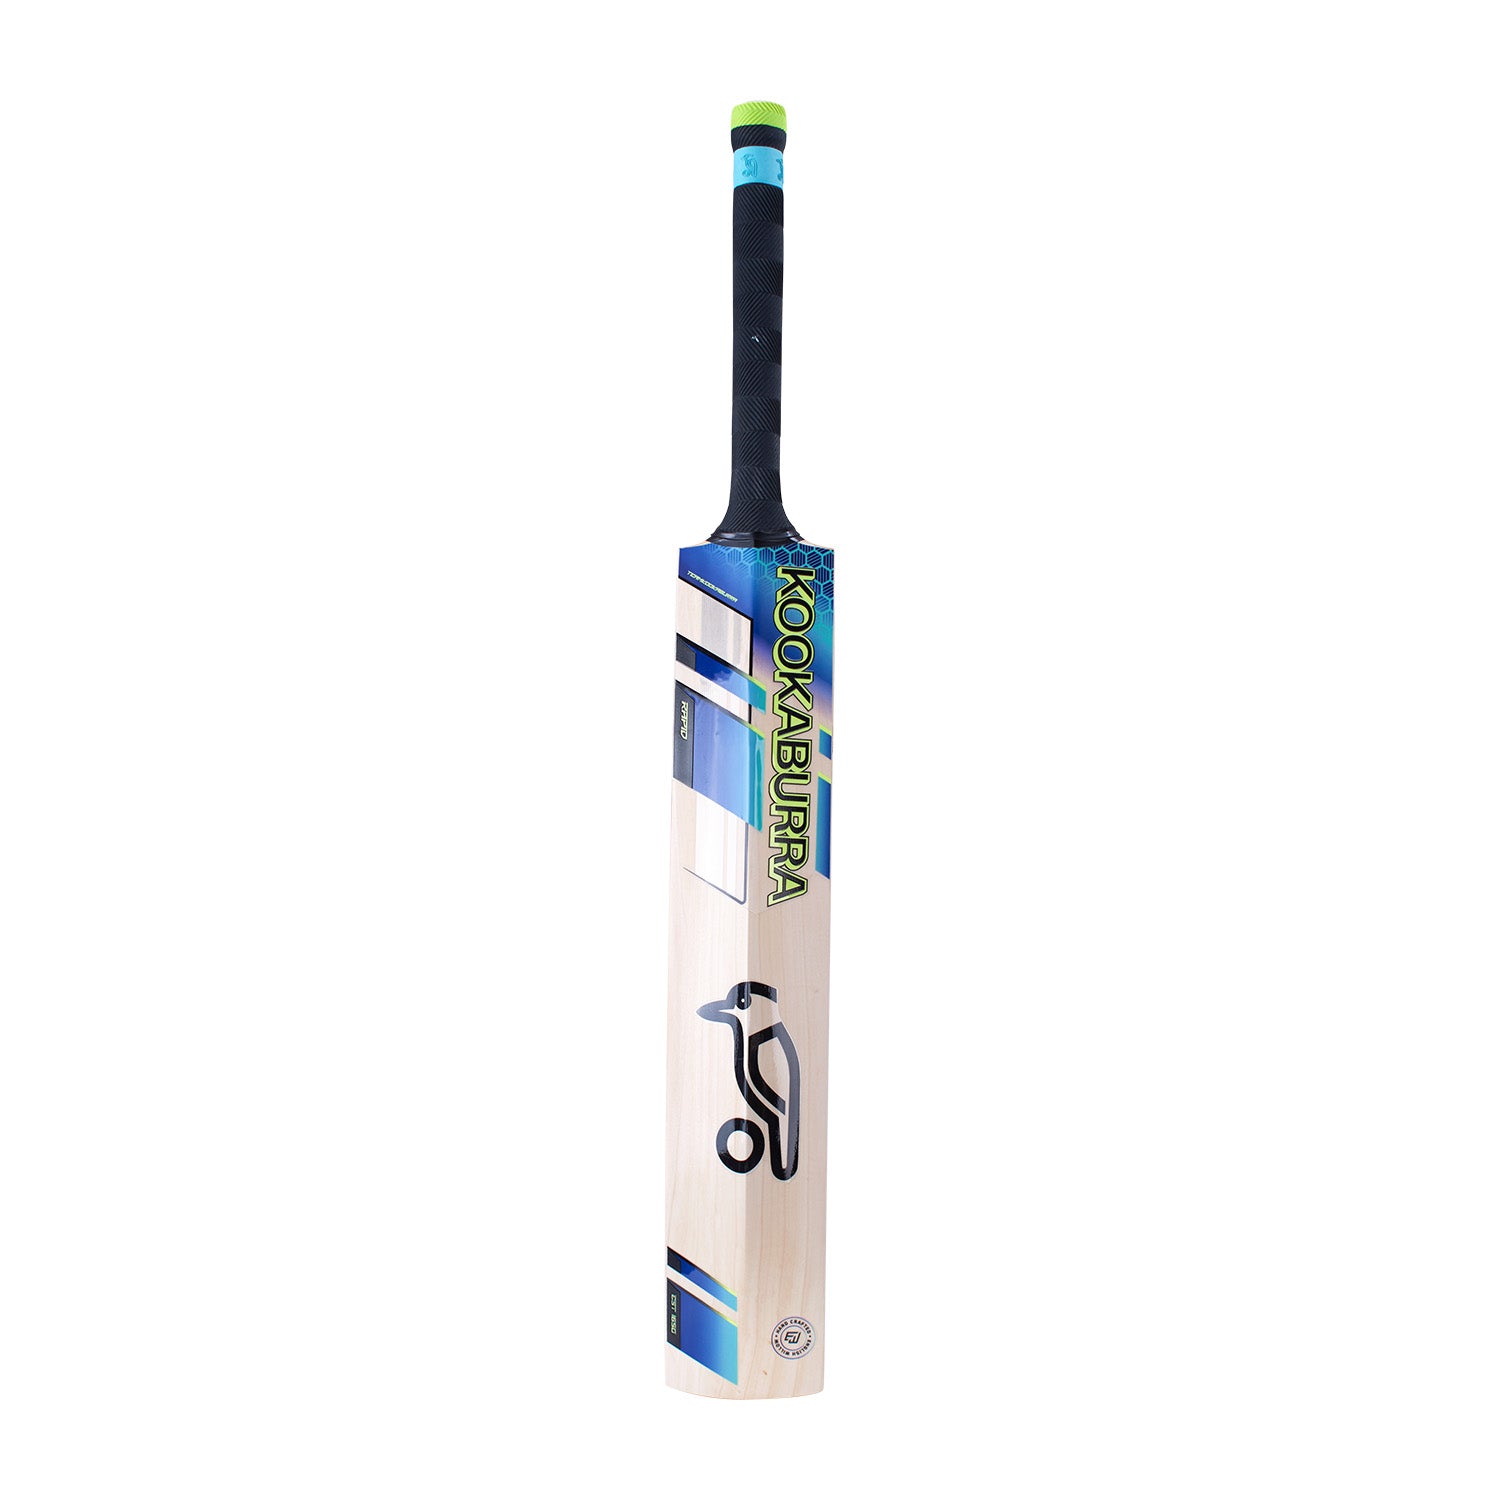 Kookaburra Rapid 6.4 Senior Cricket Bat